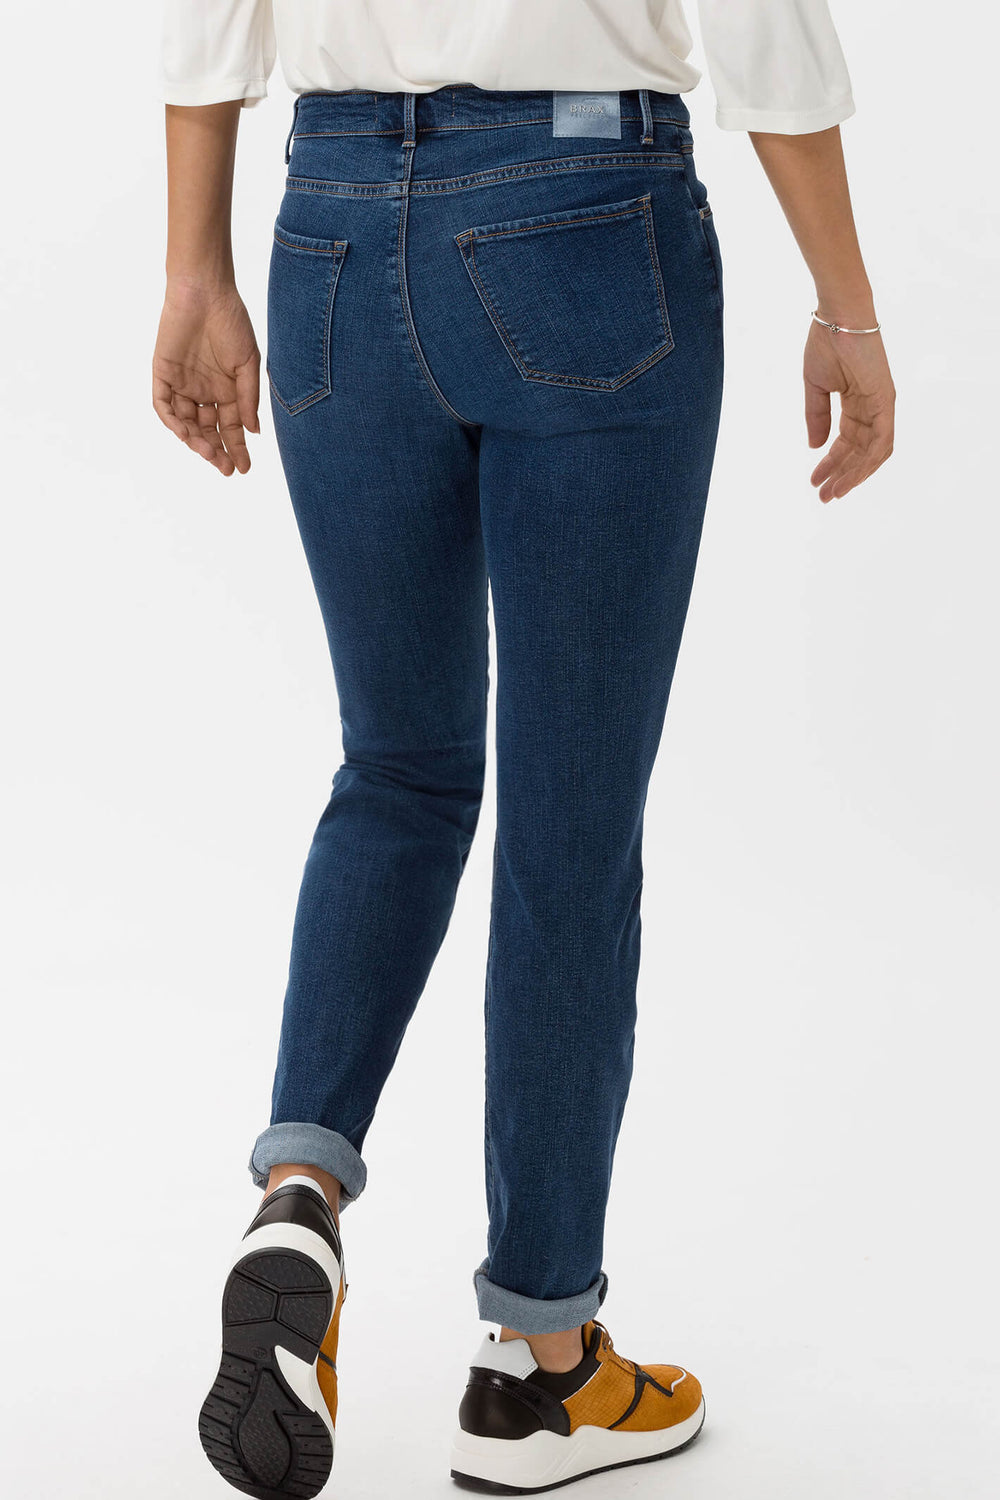 Brax Shakira 70-1000 25 Slightly Used Blue Denim Free To Move Jeans - Shirley Allum Boutique